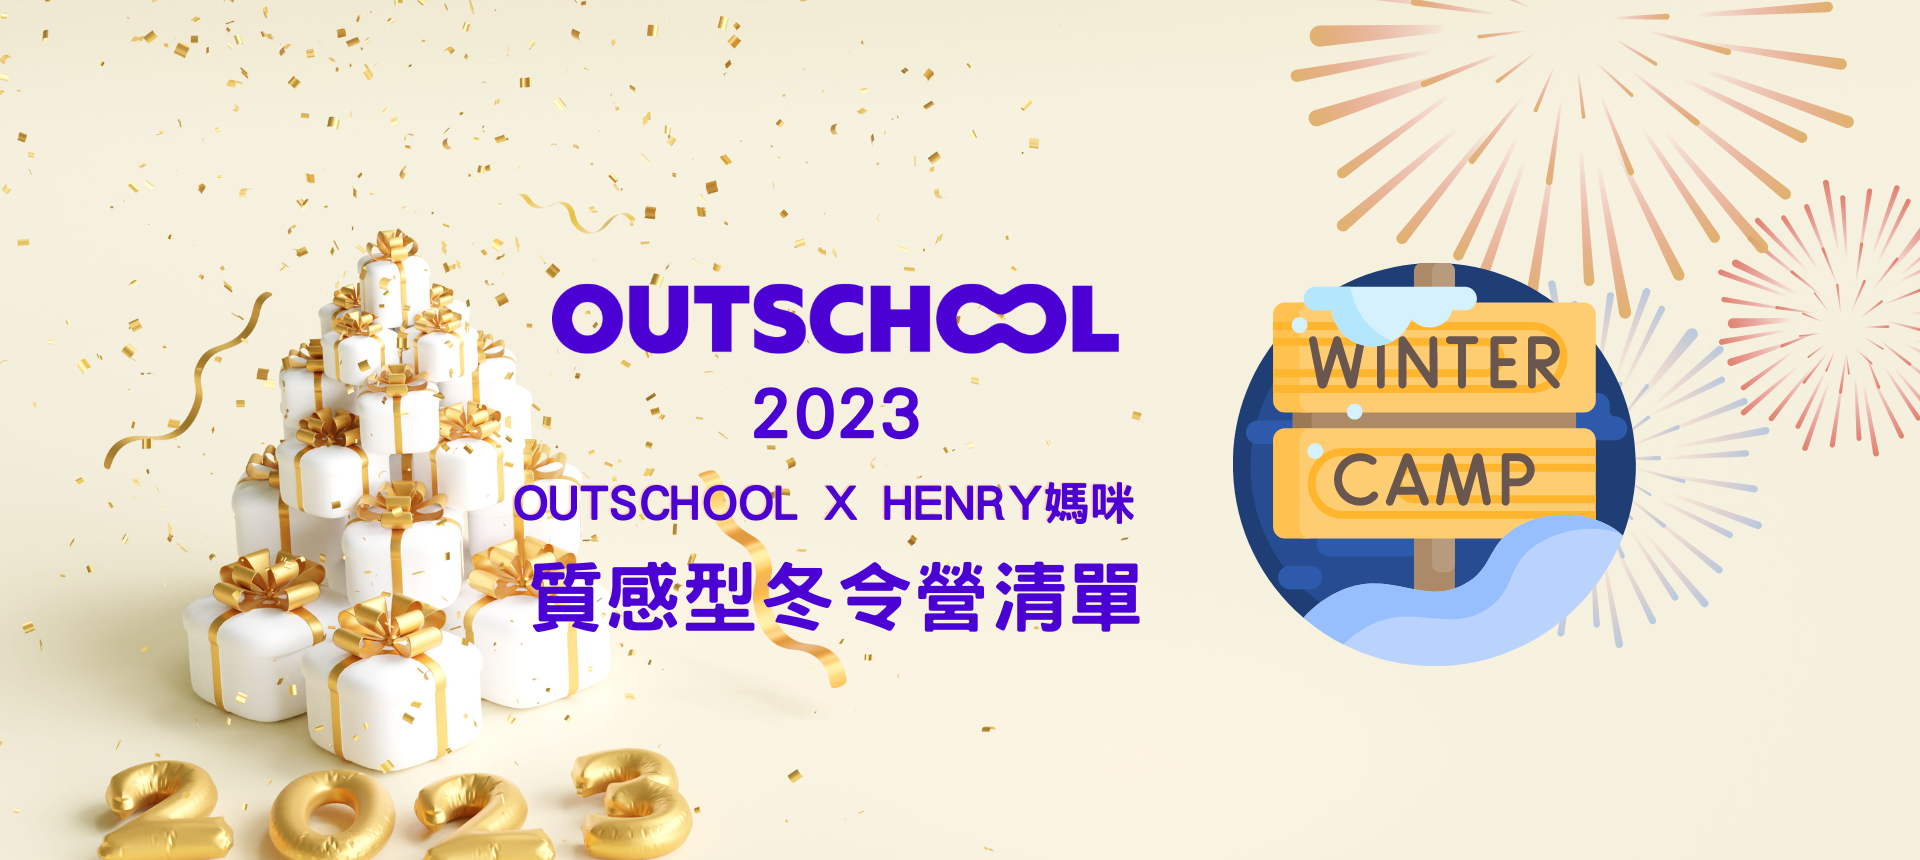 2023 Outschool X Henry's Blog 質感型冬令營清單來囉!(請留意:坑很深!)